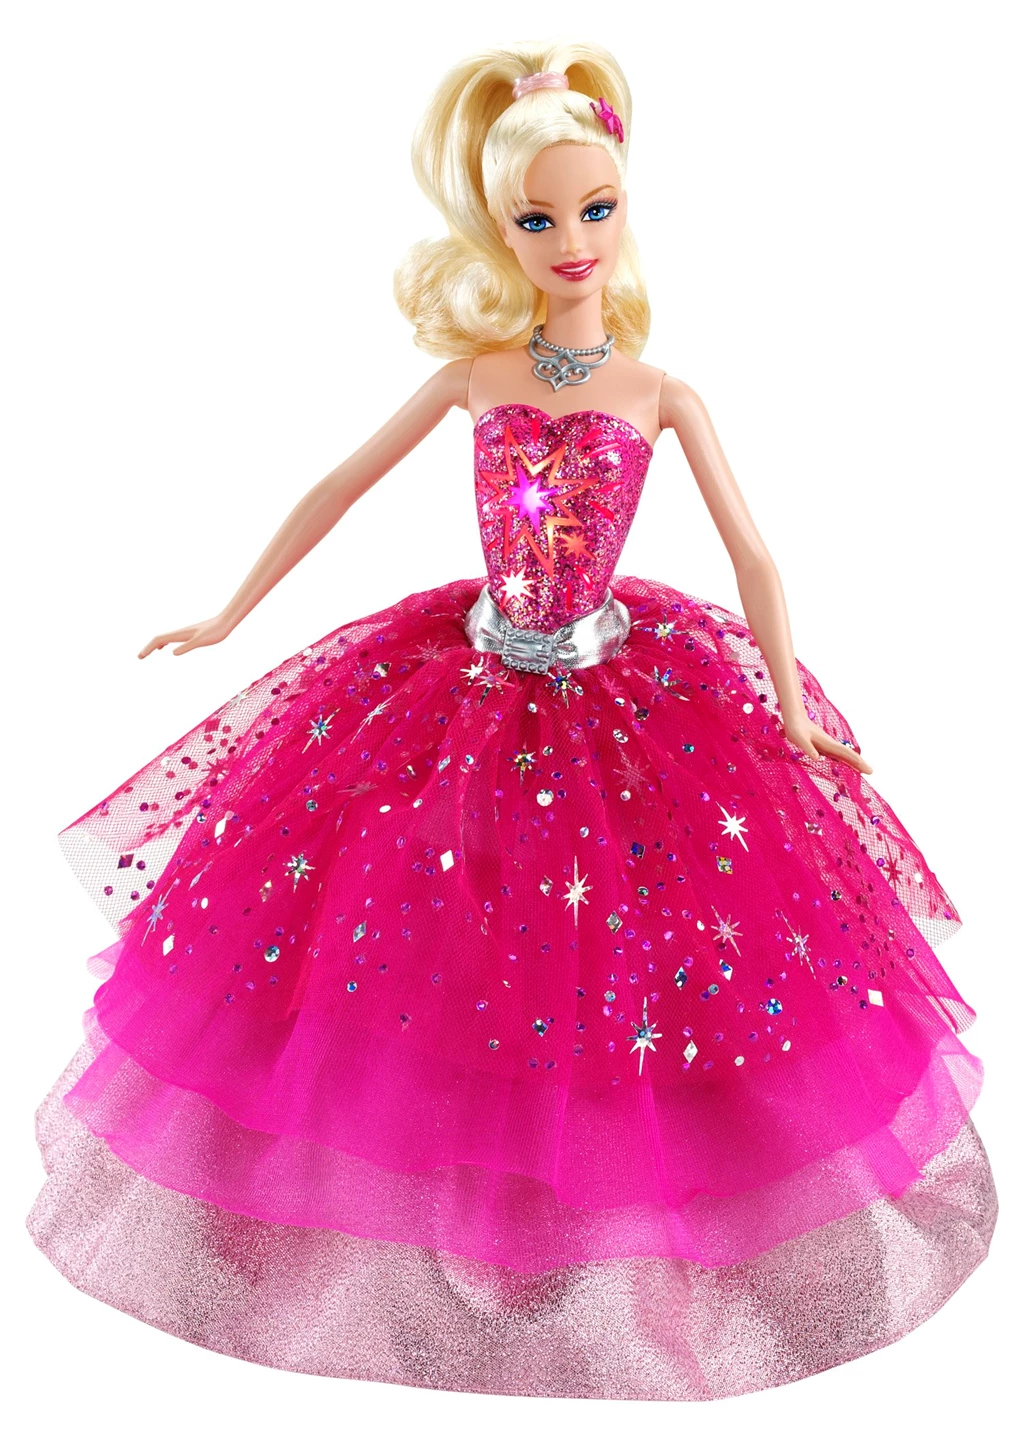 Barbie Doll HD Wallpapers | Most Beautiful Barbie Dolls ...